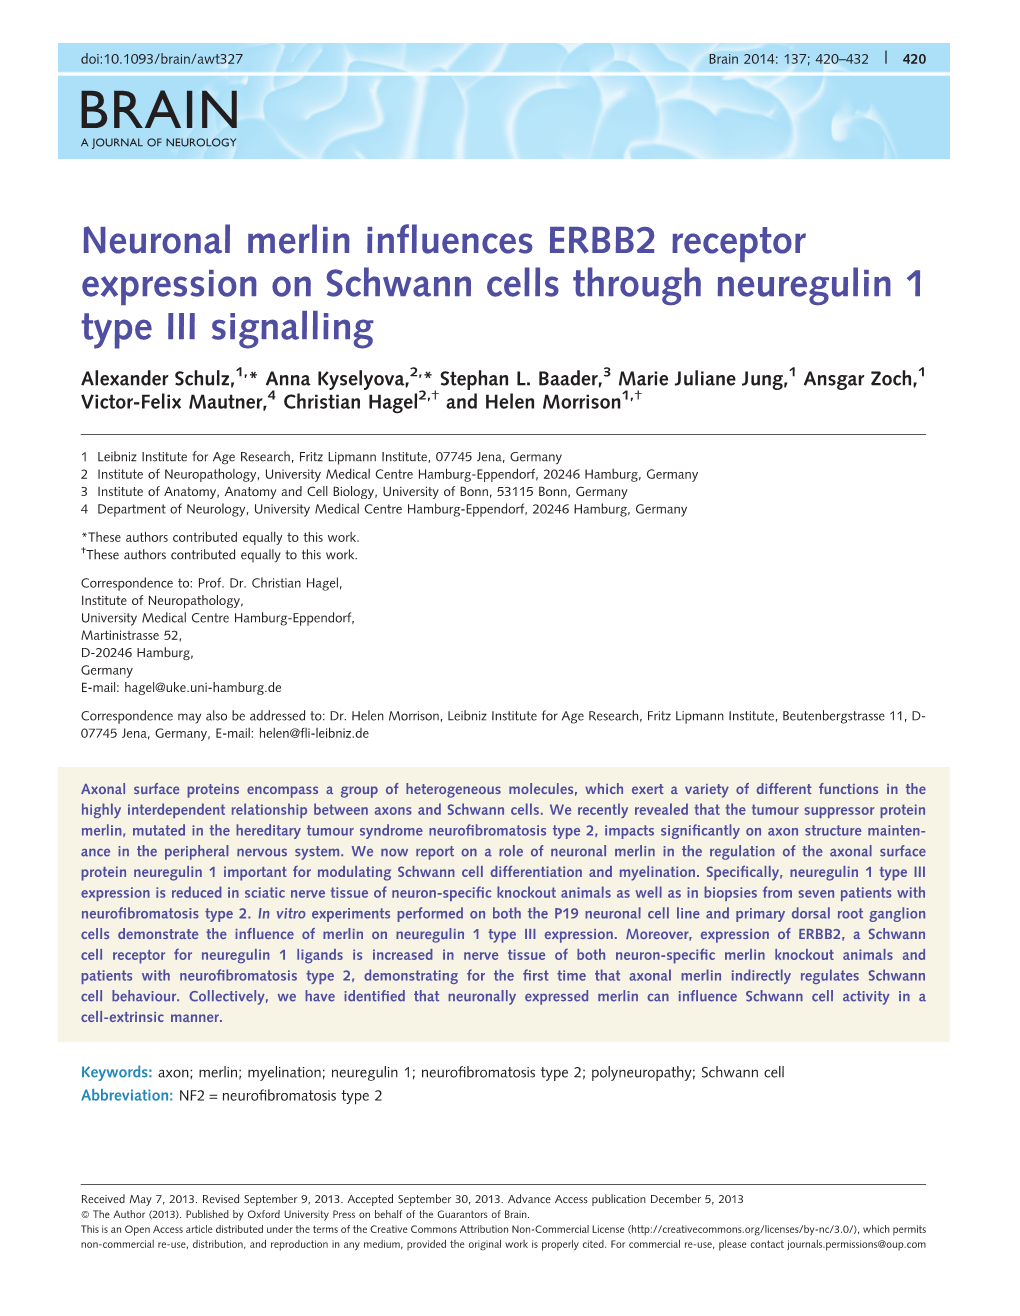 Neuronal Merlin Influences ERBB2 Receptor Expression on Schwann